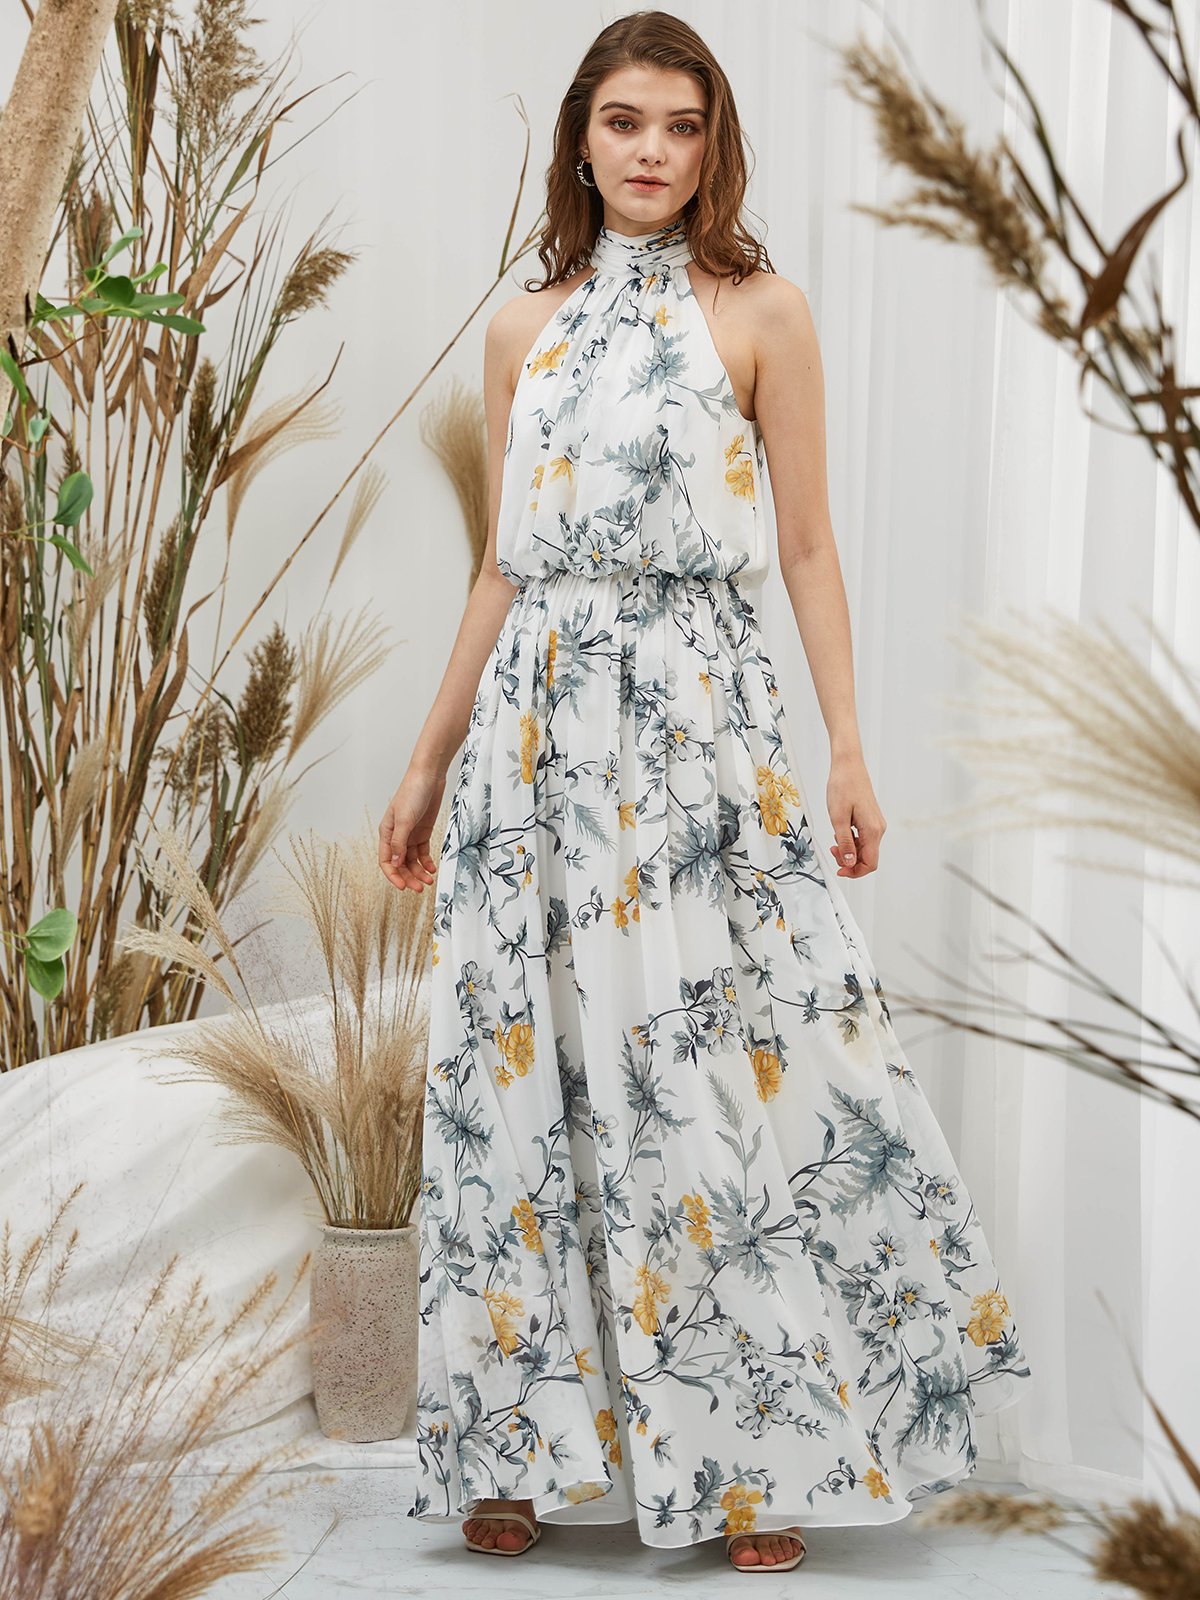 Halter High Neck Chiffon Print Floral Gray Tea Length Formal Gown